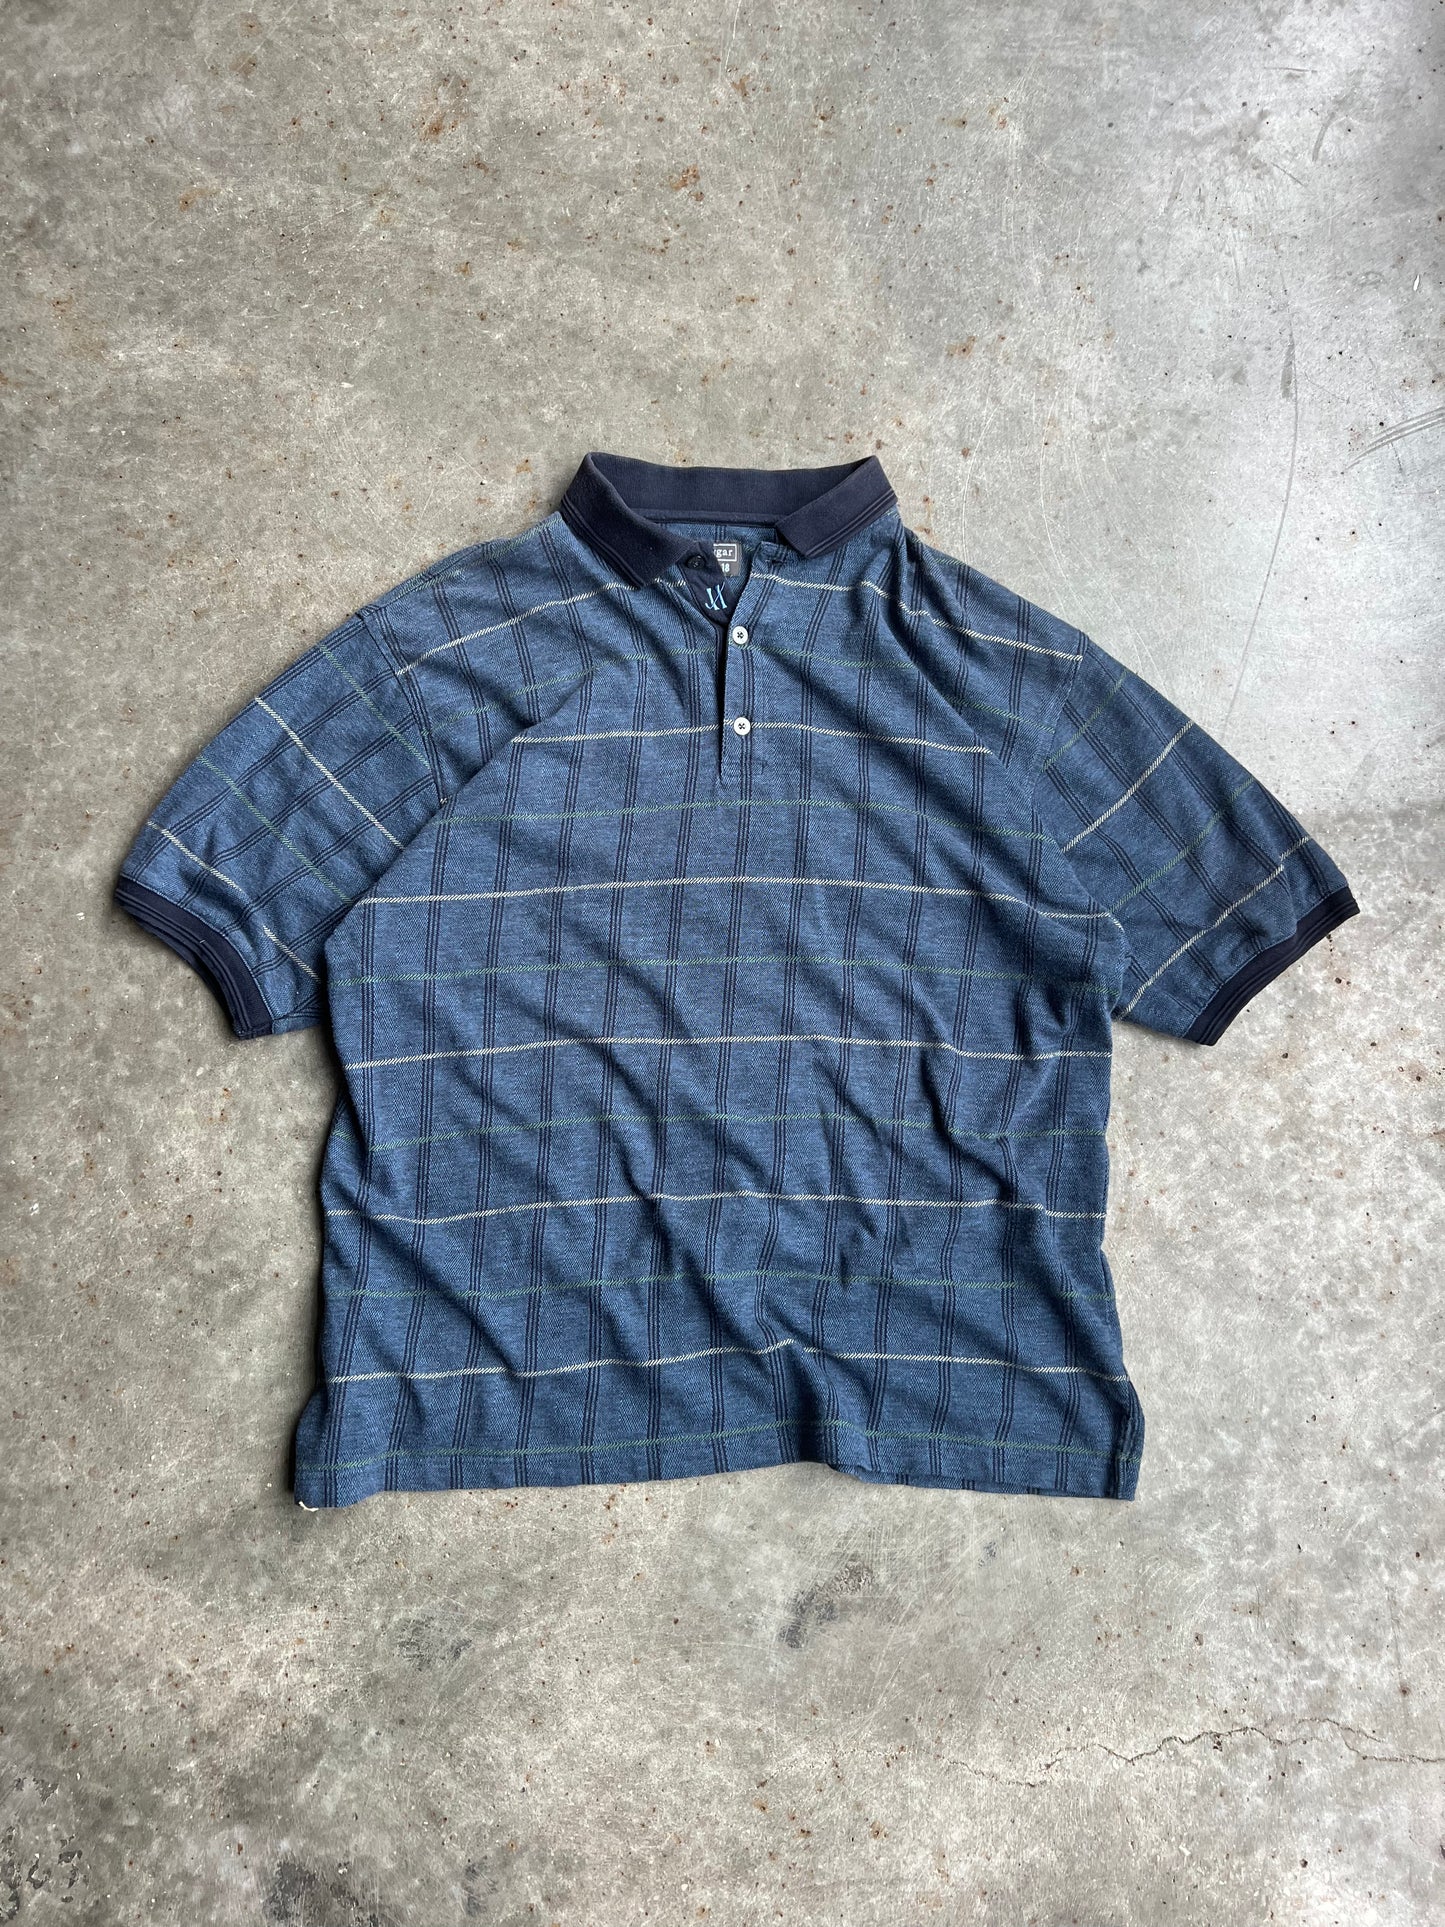 Vintage Haggar Polo Shirt - XL